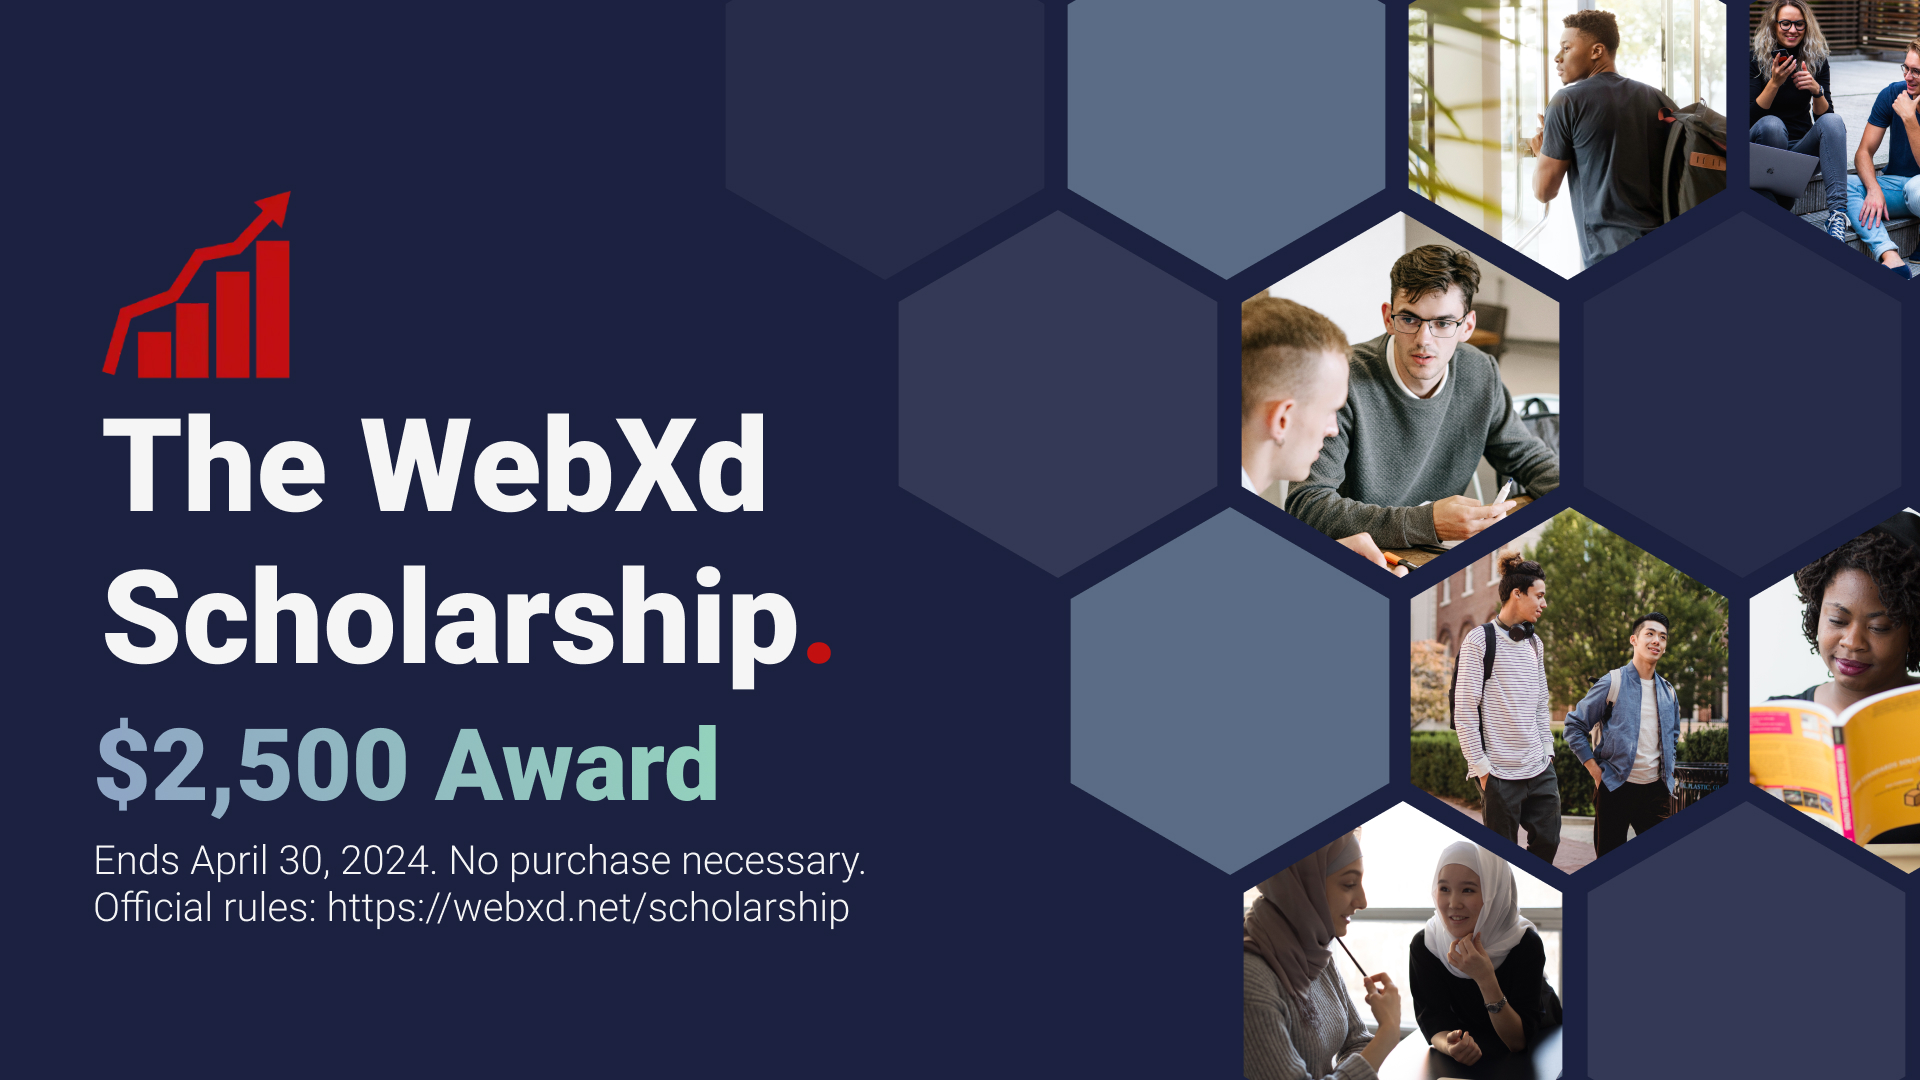 WebXd Launches $2,500 WebXd Scholarship